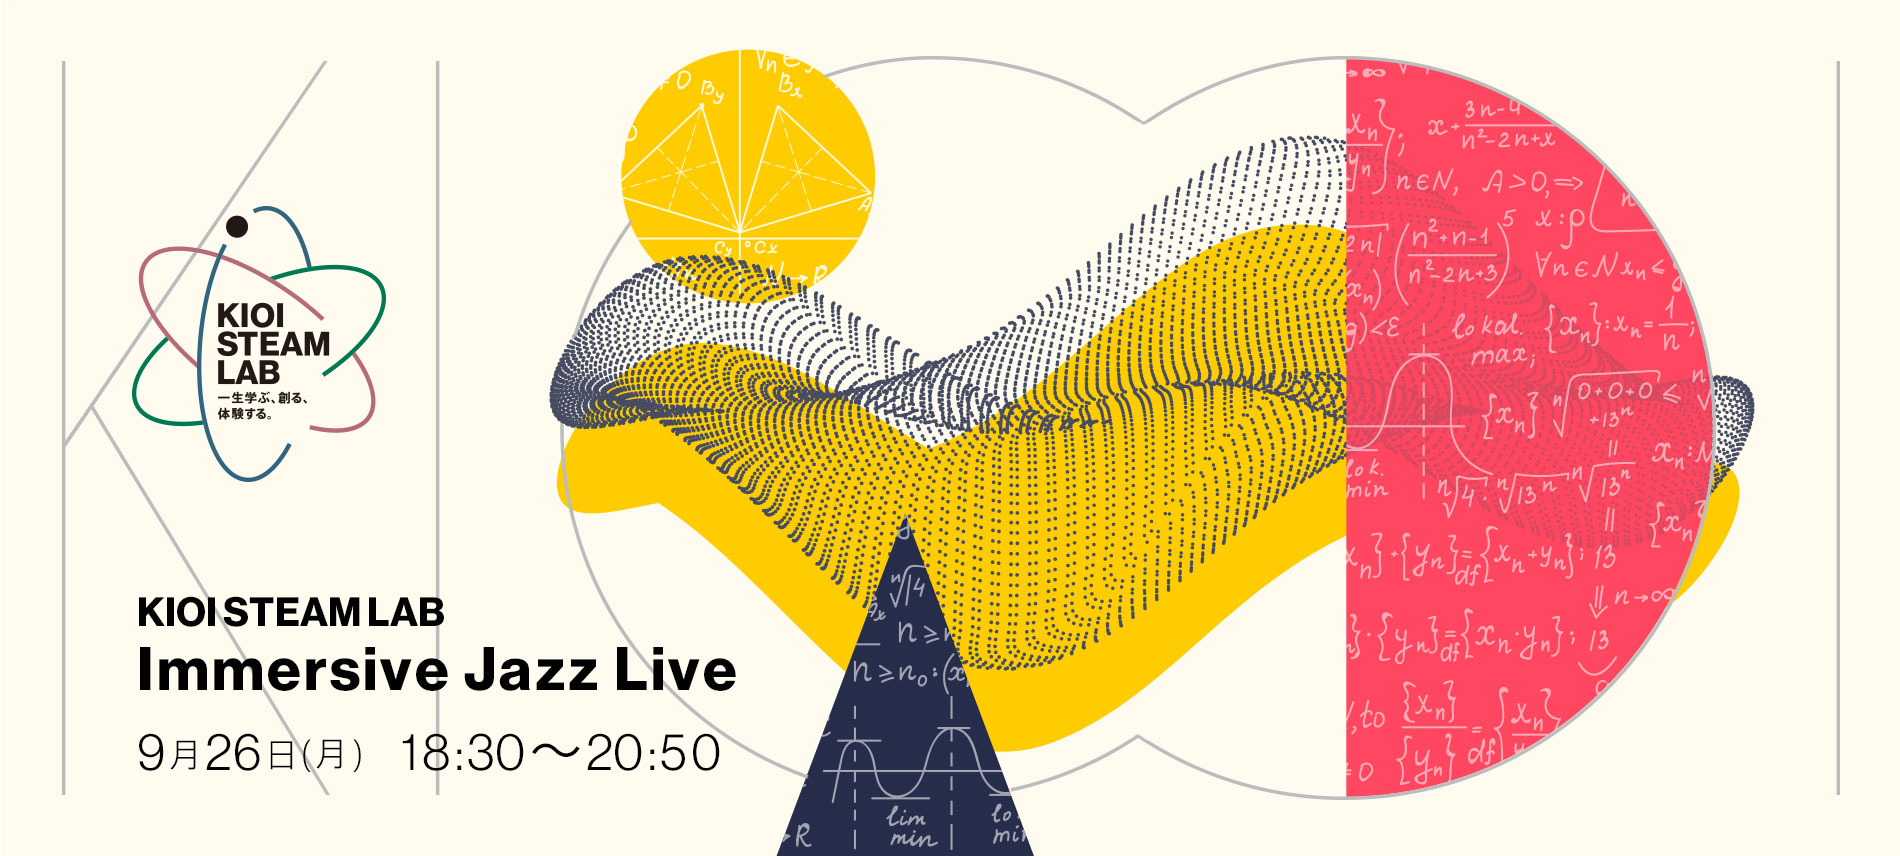 KIOI STEAM LAB「Immersive Jazz Live」